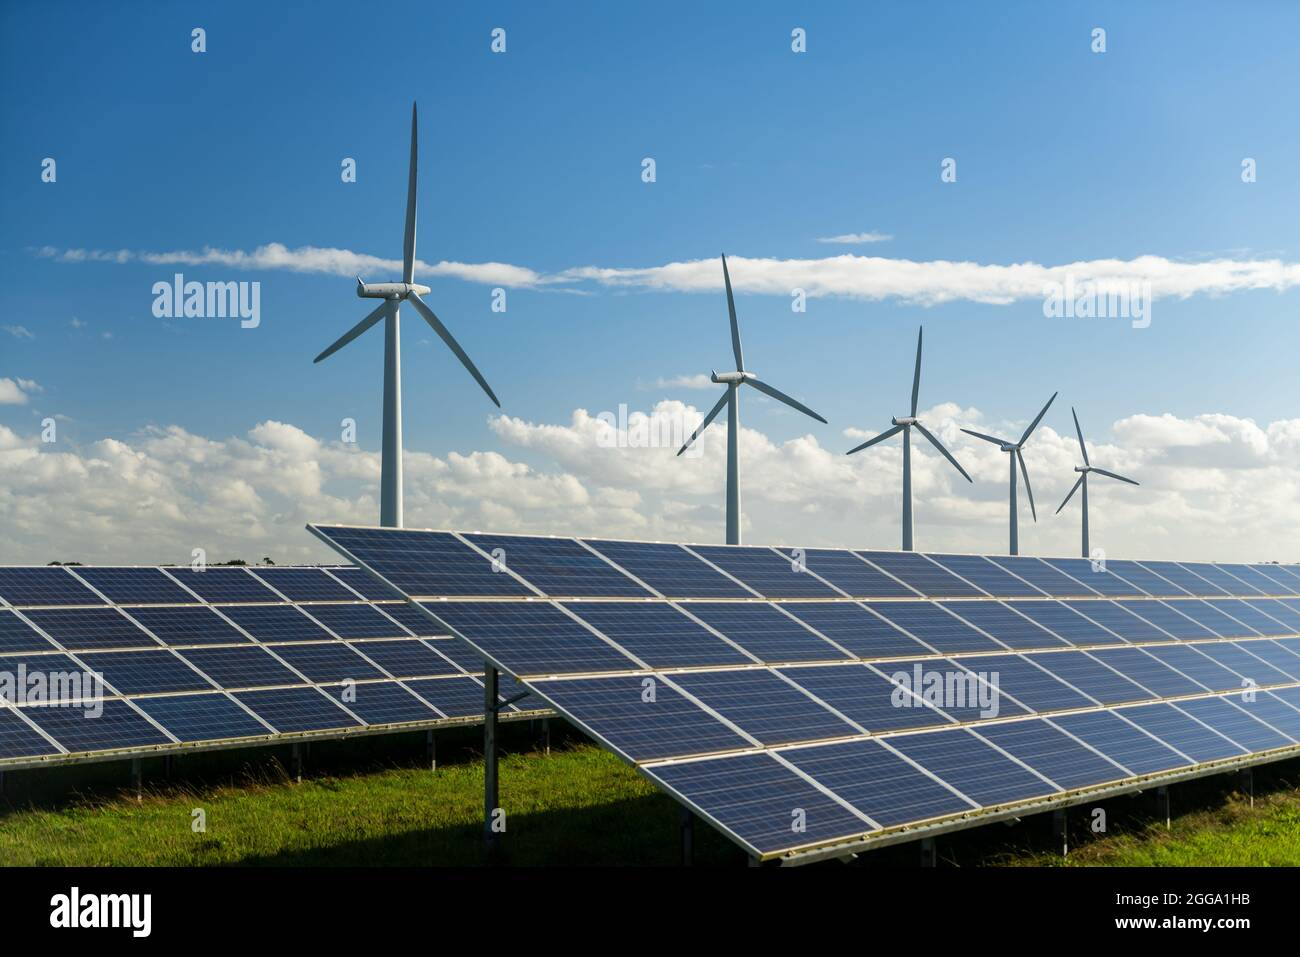 Wind turbine and solar panels energy generaters on wind farm Stock Photo